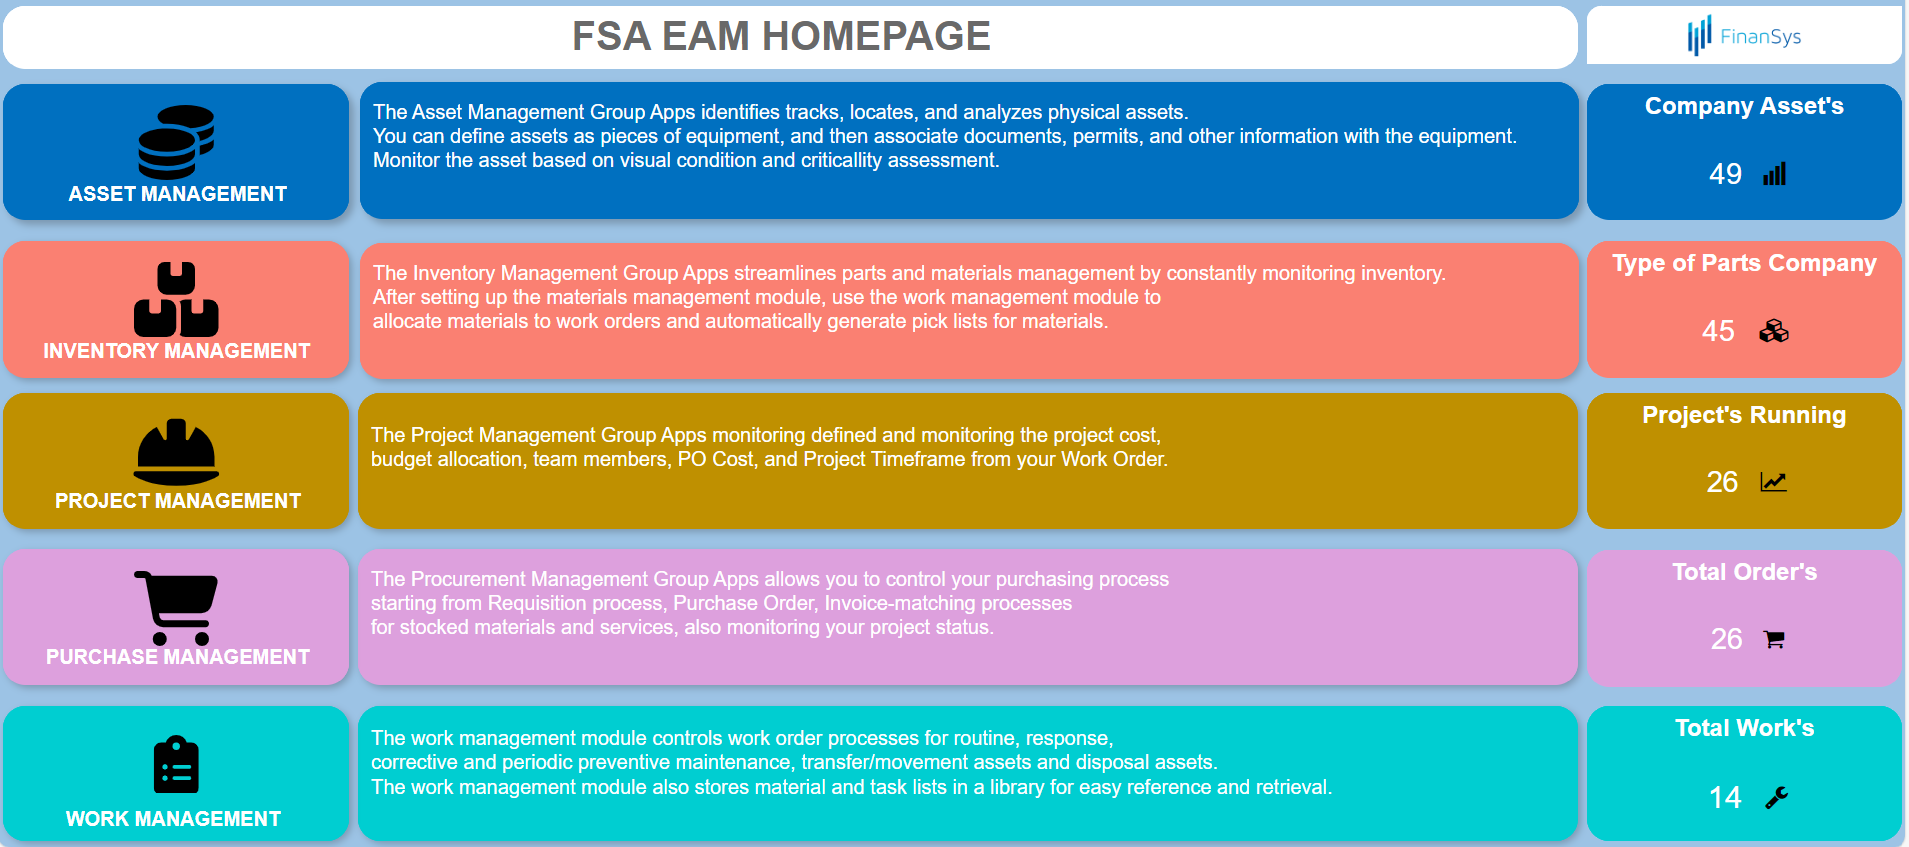 FSA EAM Homepage_v2